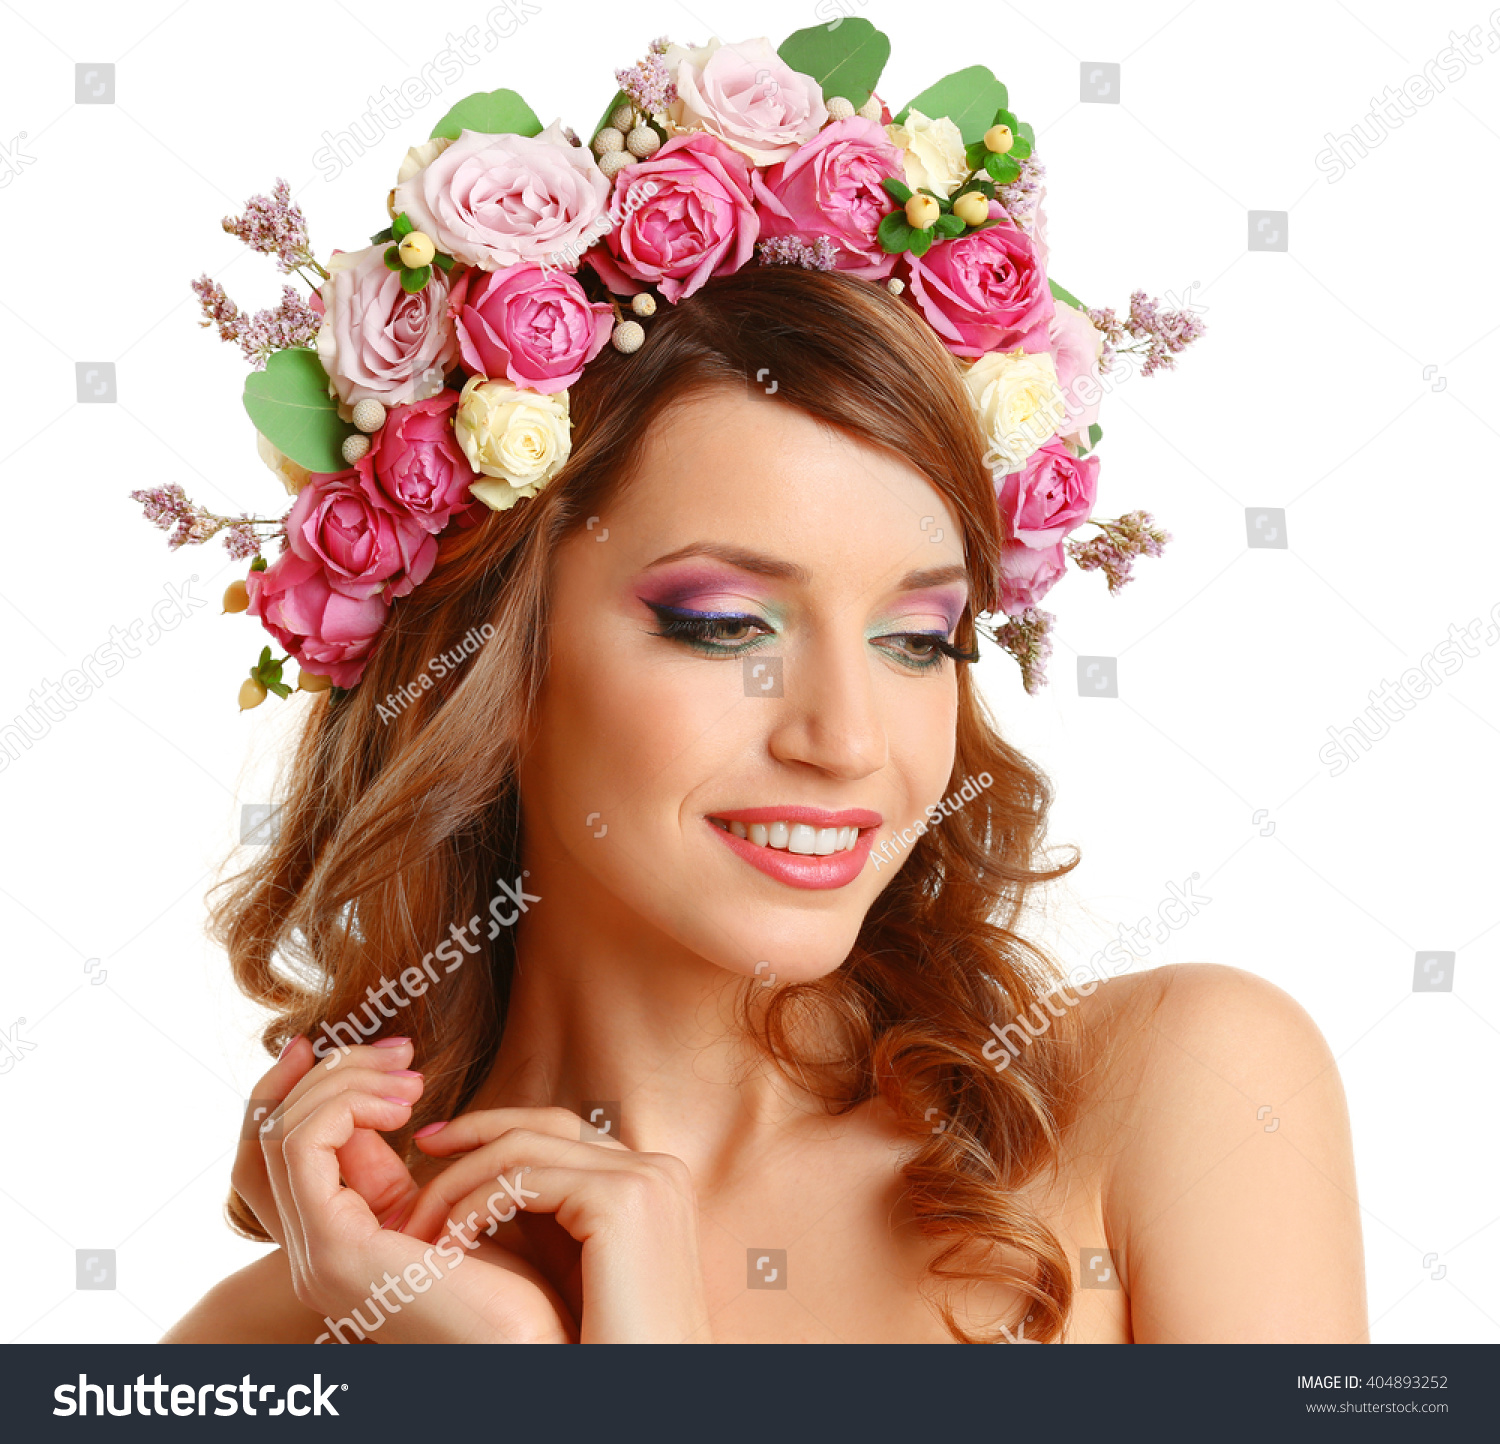 Beautiful Young Woman Wearing Floral Headband Stock Photo 404893252 ...